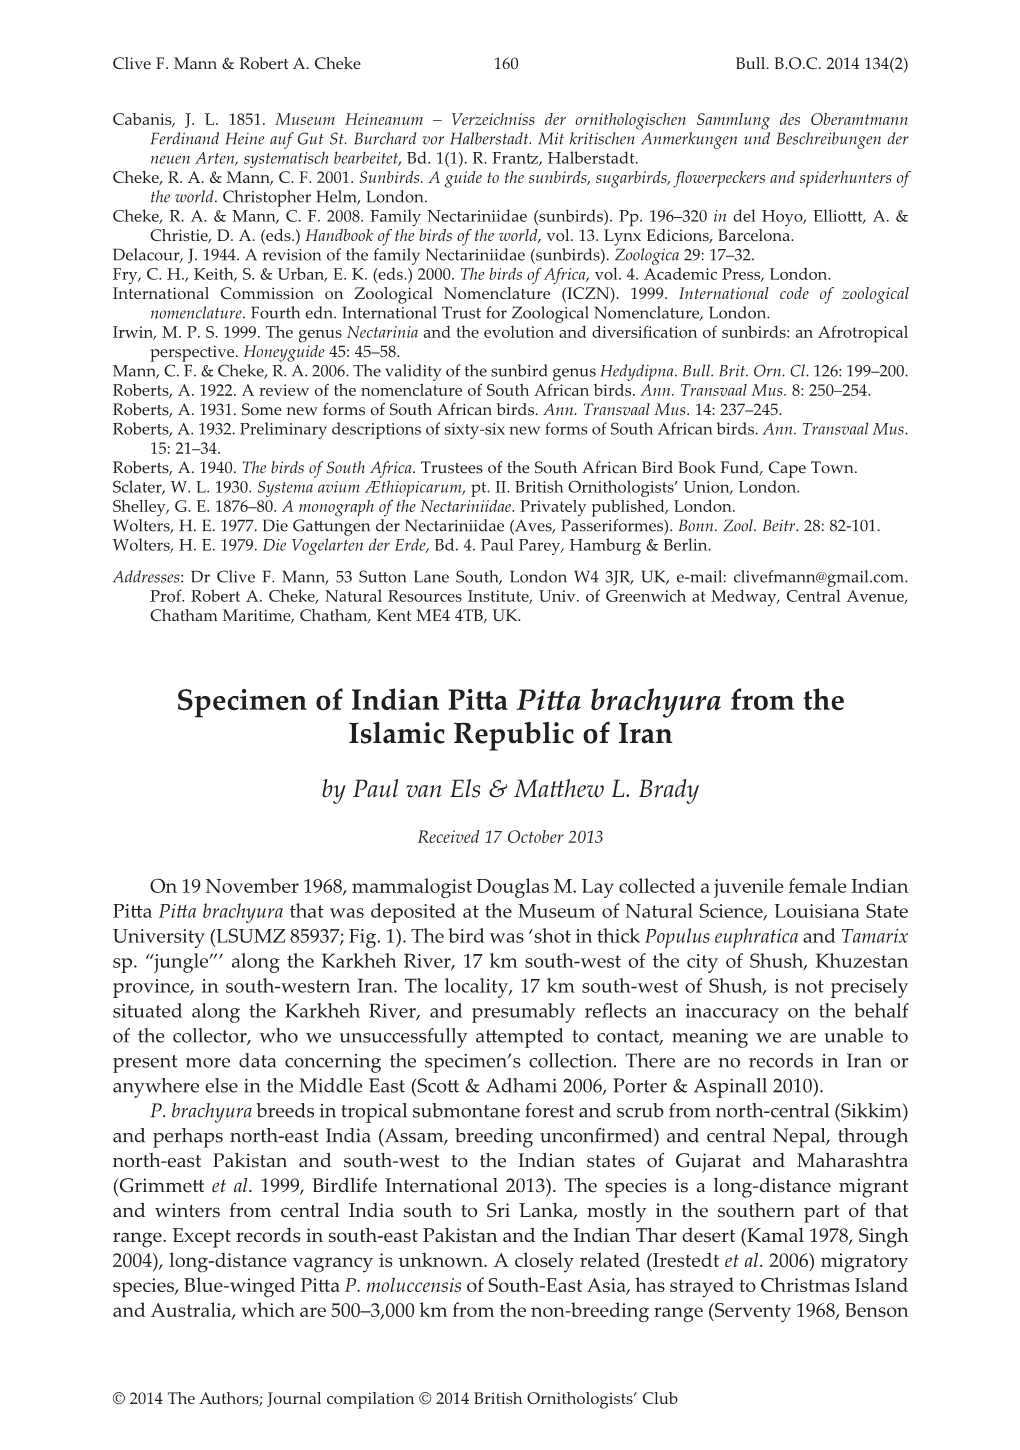 Specimen of Indian Pitta Pitta Brachyura from the Islamic Republic of Iran